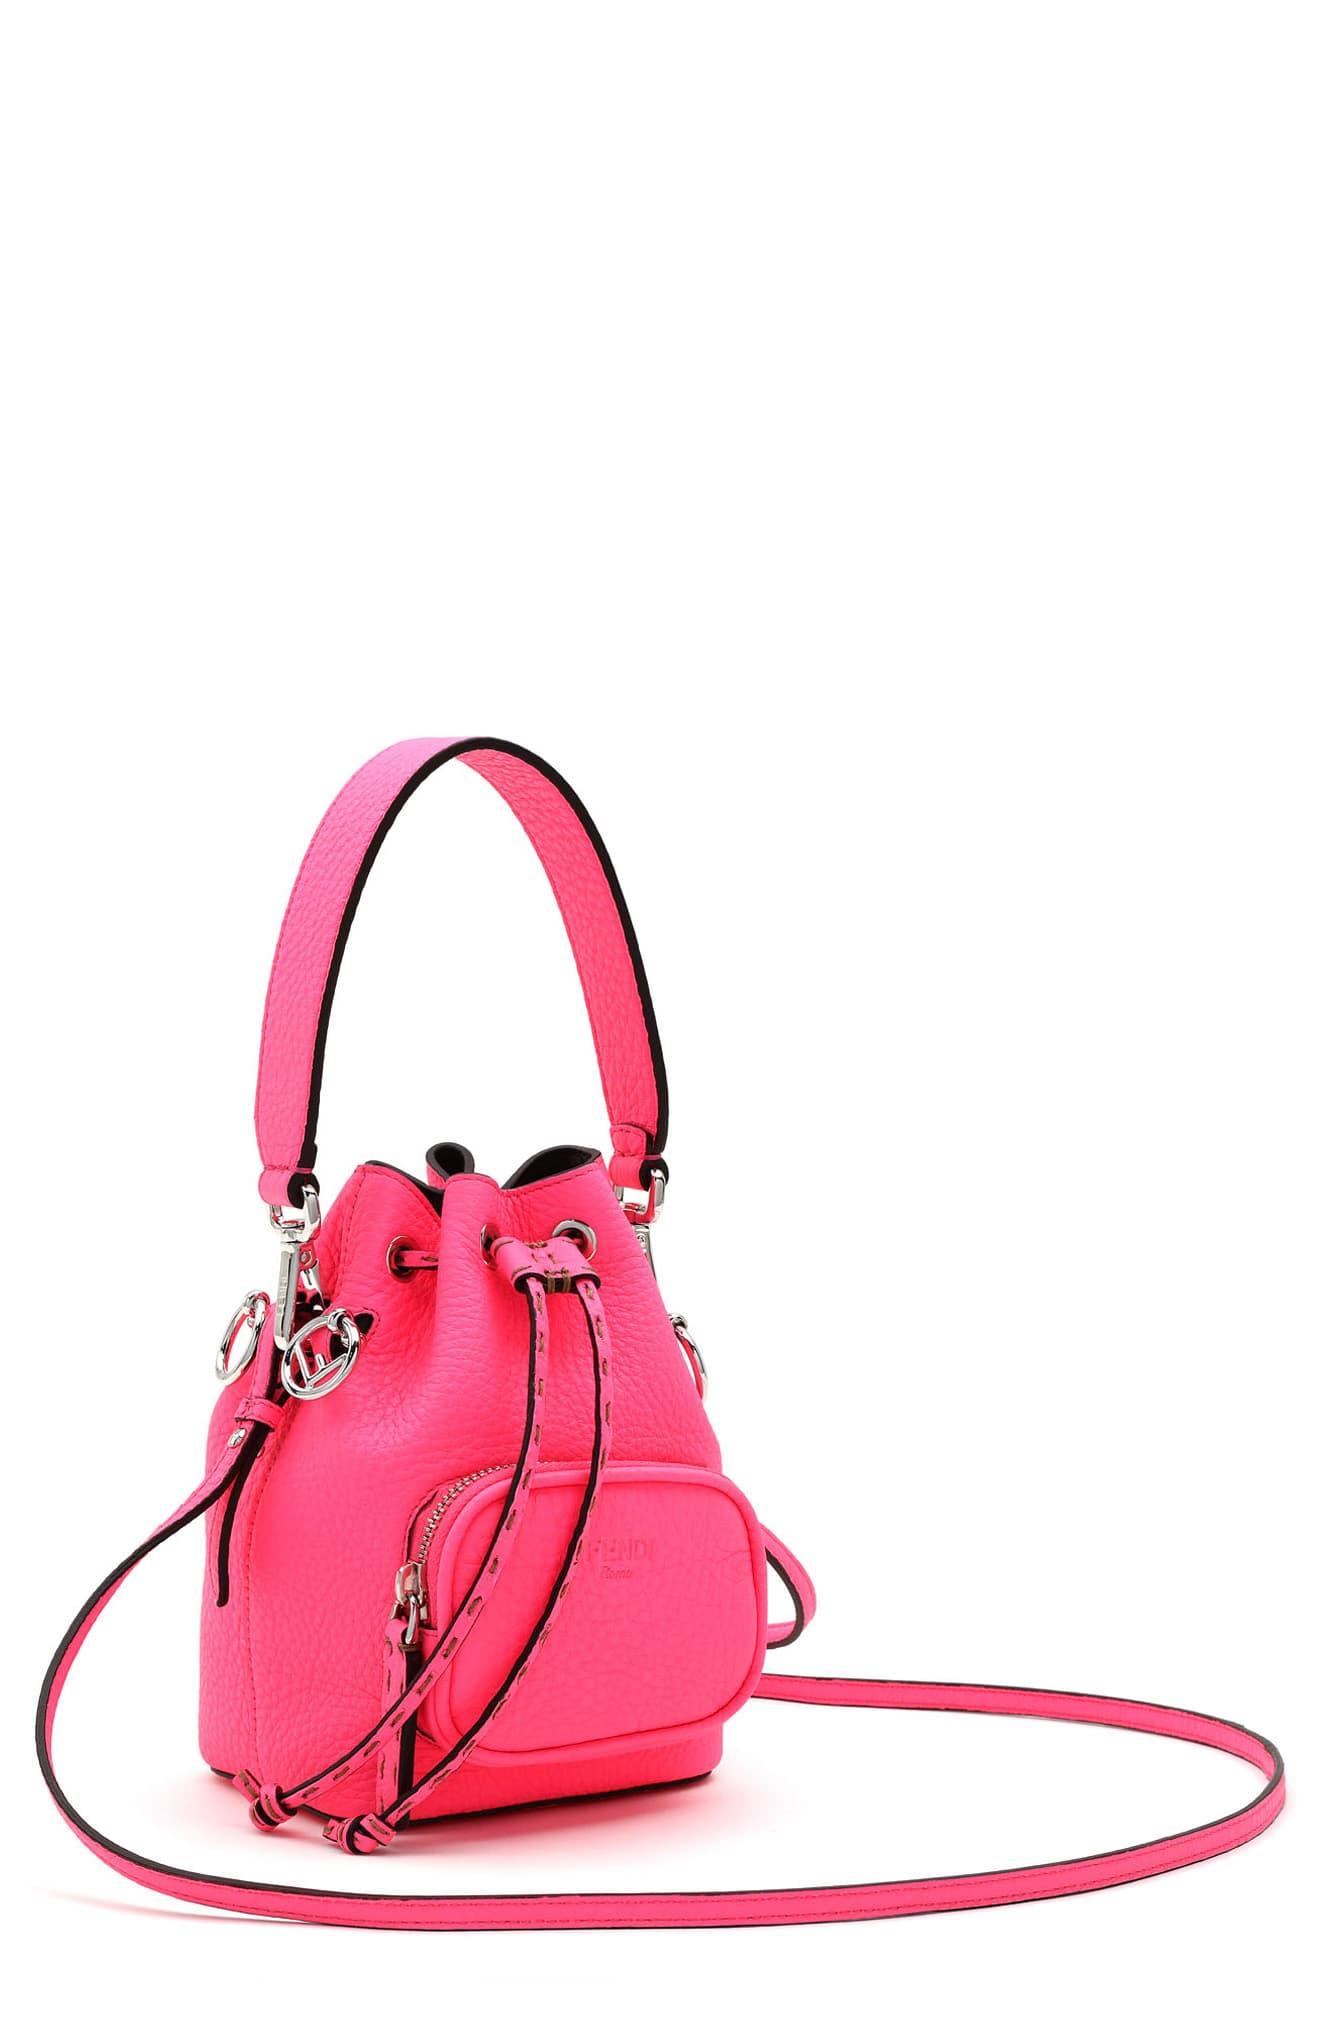 Fendi Mini Mon Tresor Leather Bucket Bag in Pink - Lyst